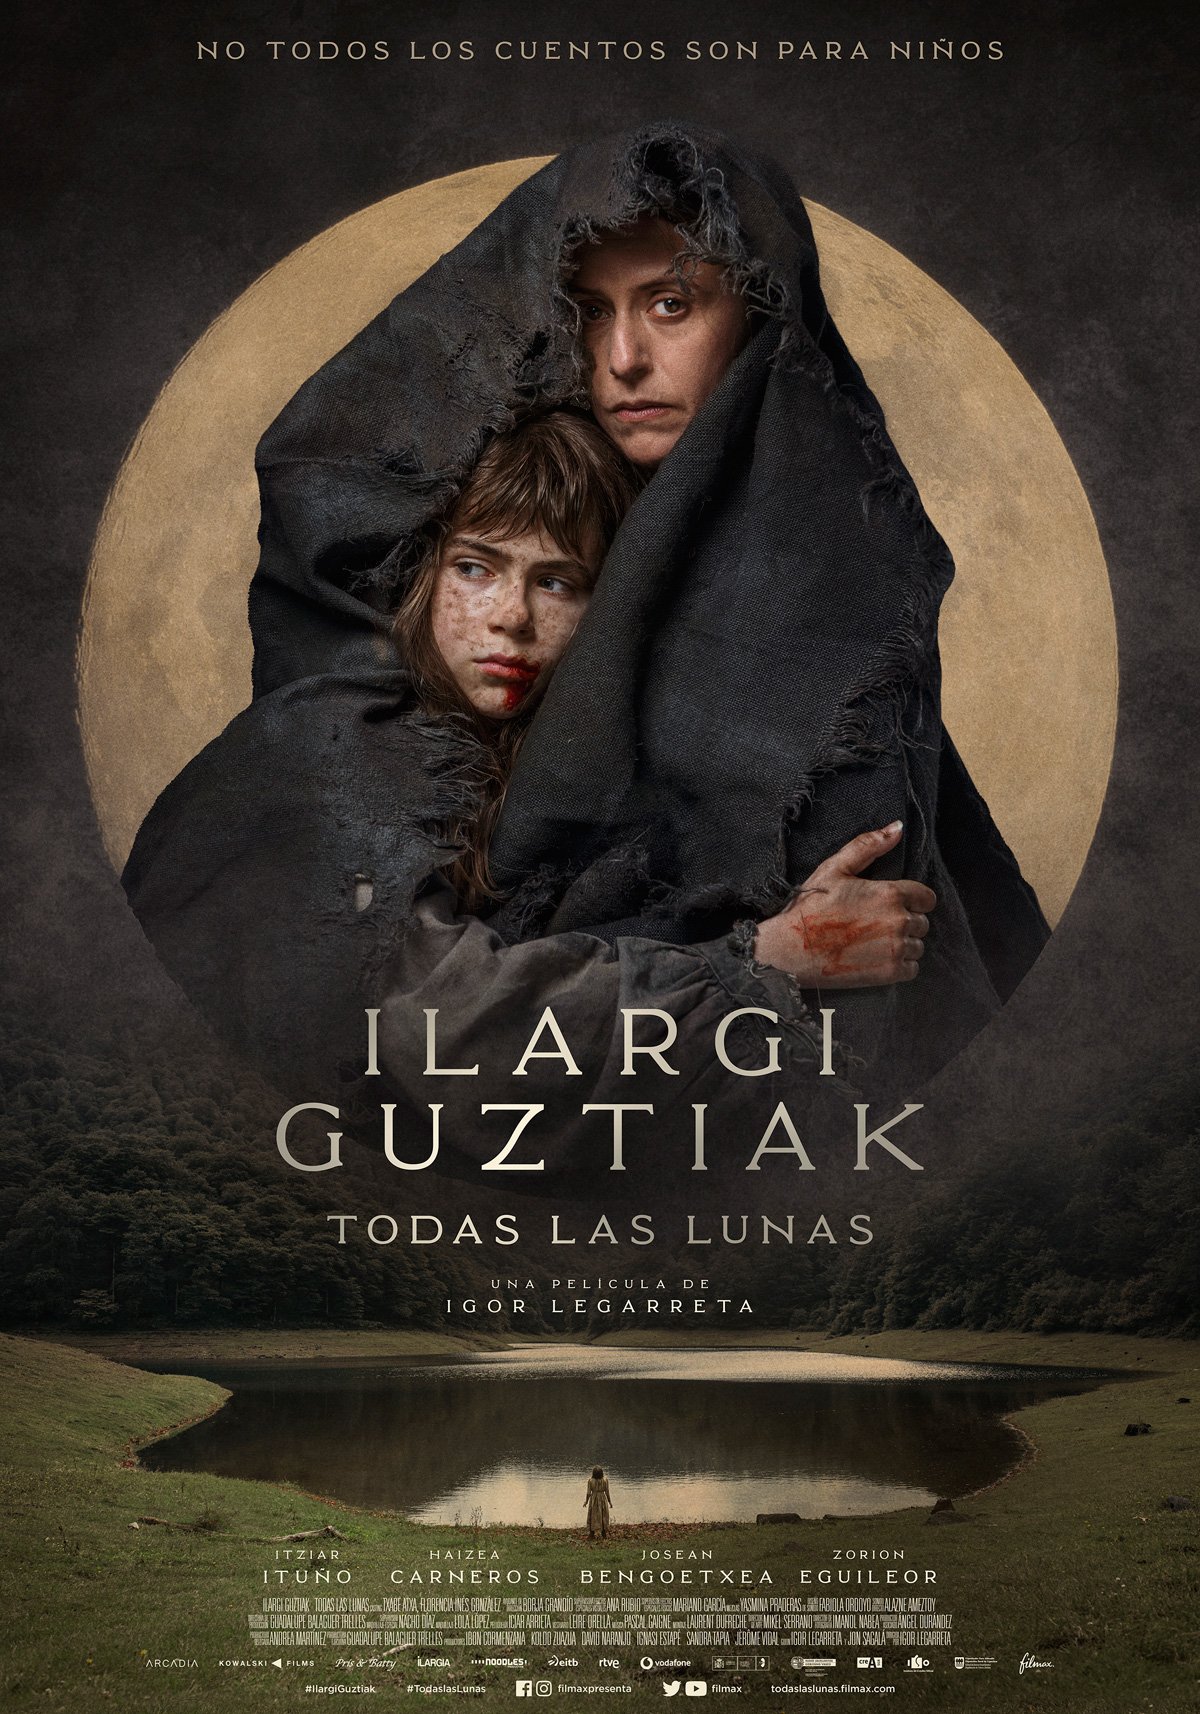 Ilargi Guztiak (Todas las lunas) : Affiche